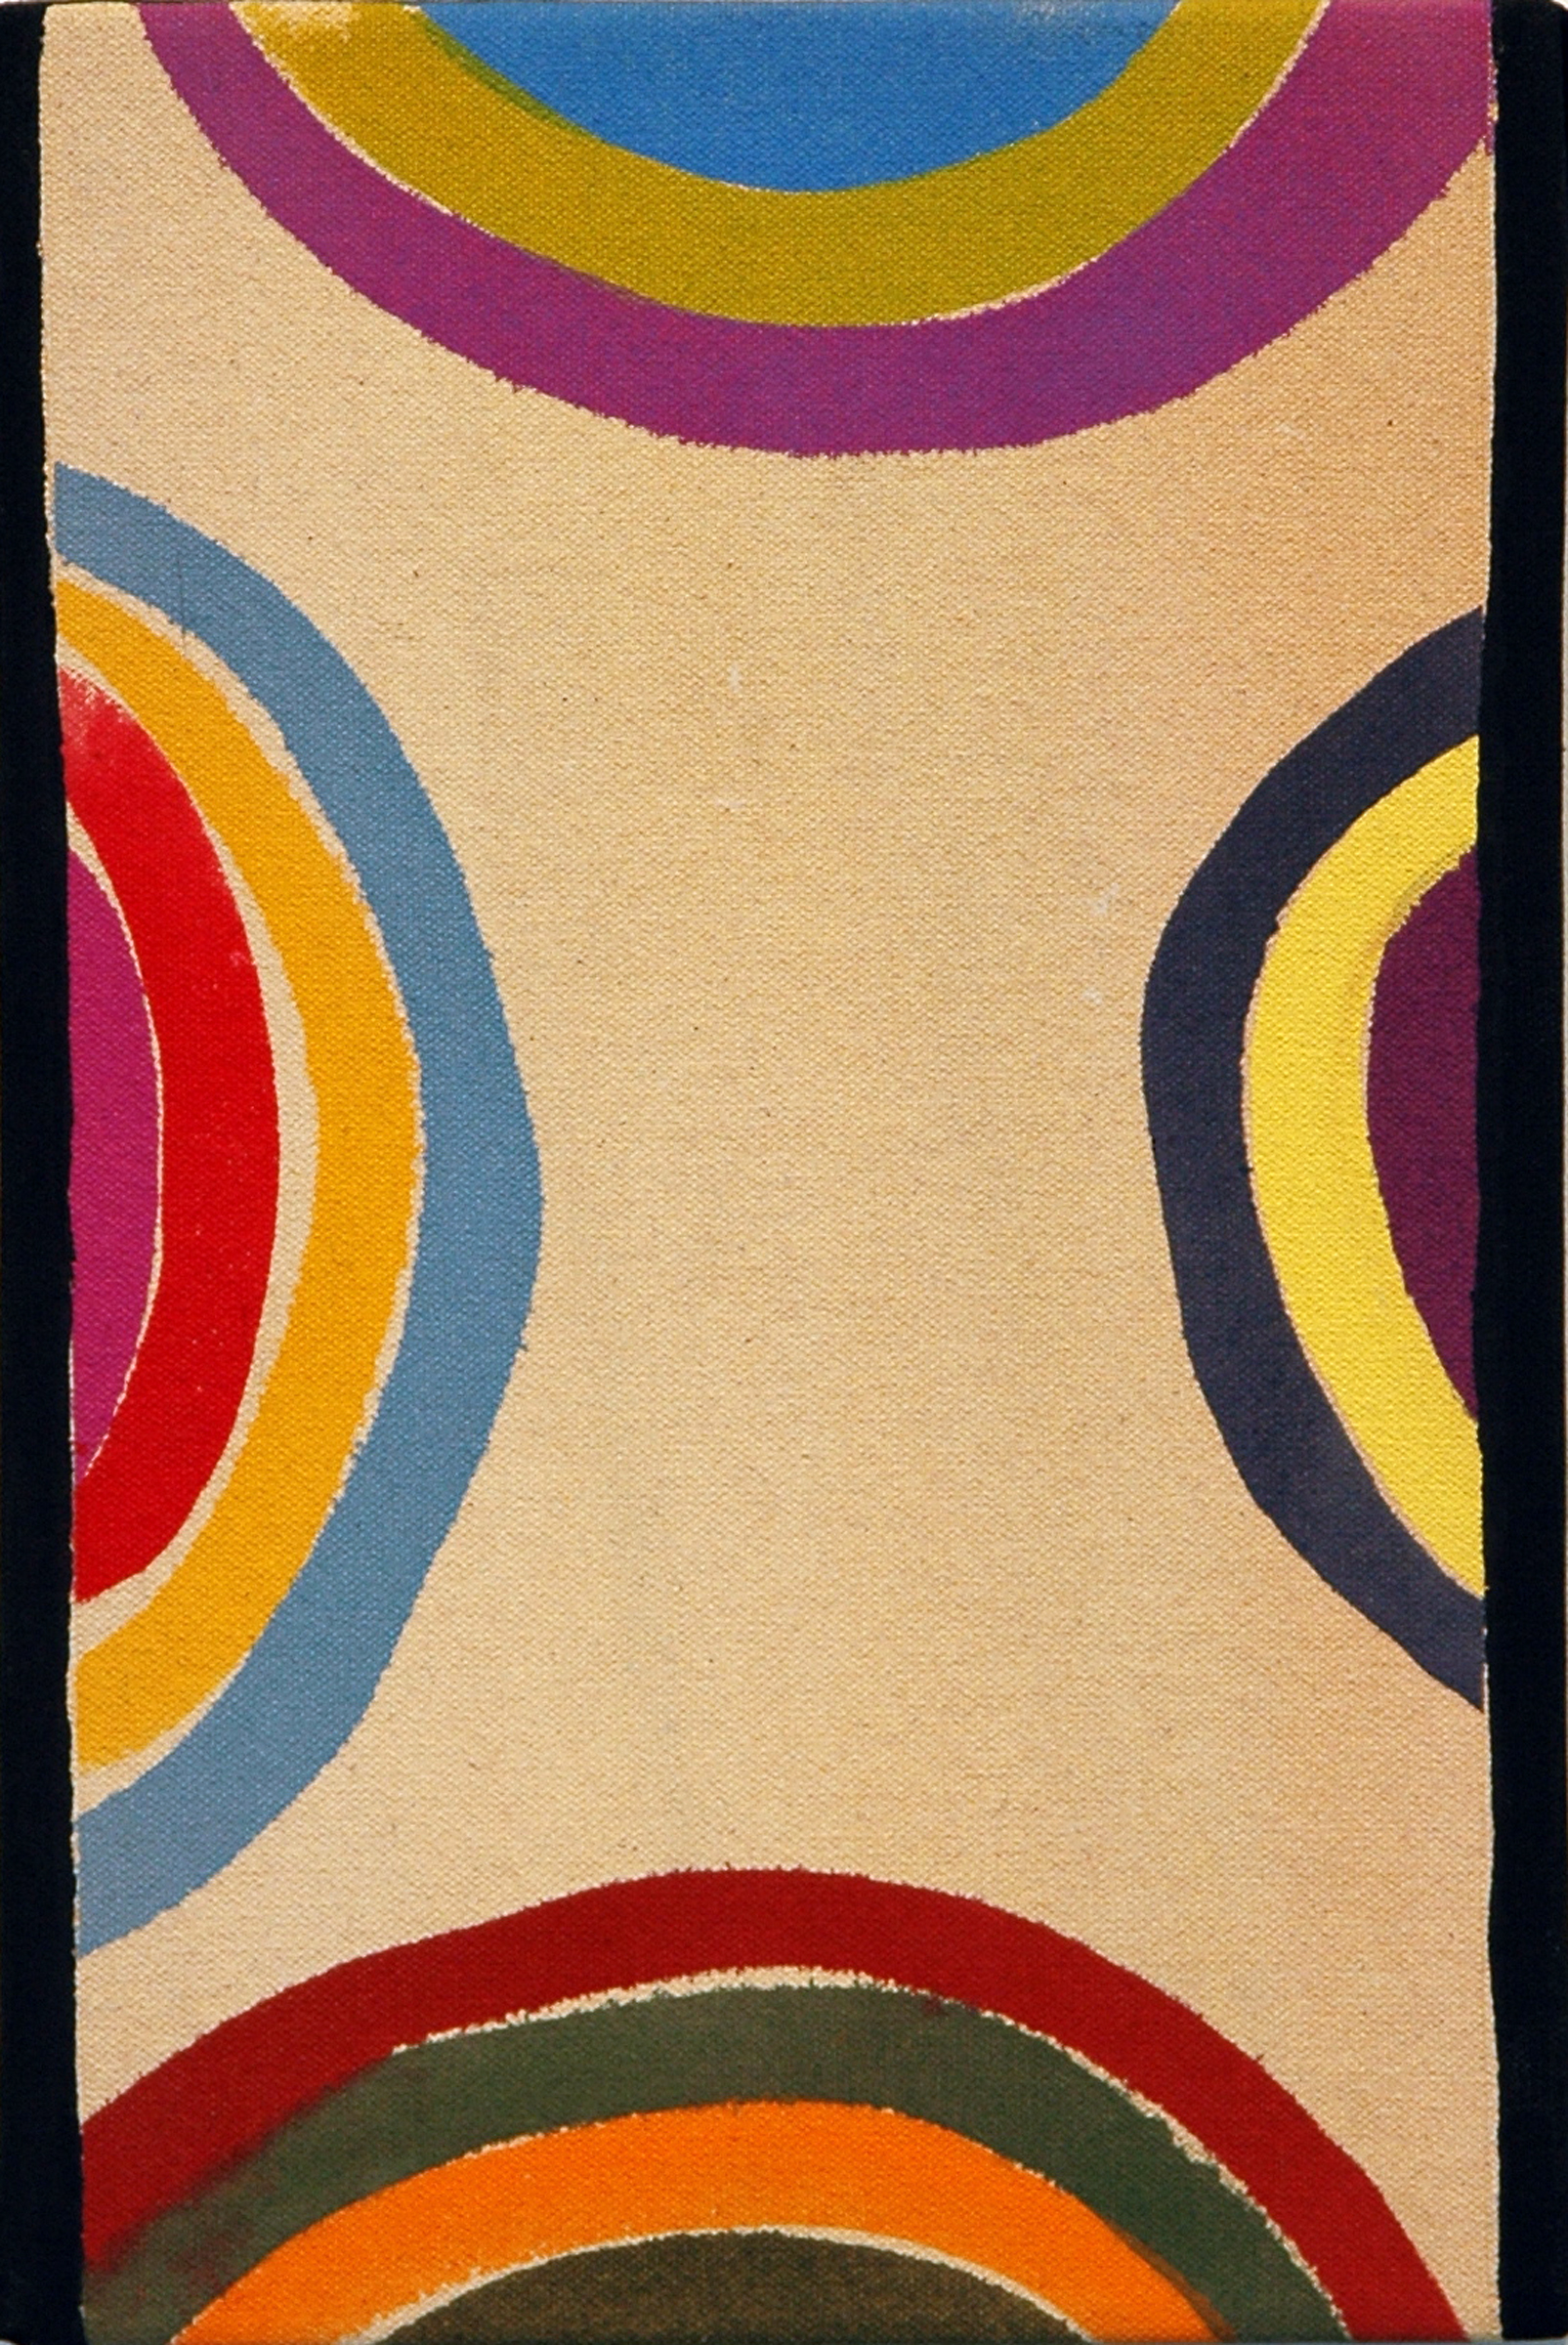   AMANDA CURRERI   Untitled , acrylic and gesso on dyed fabric, 12" x 8", 2012 